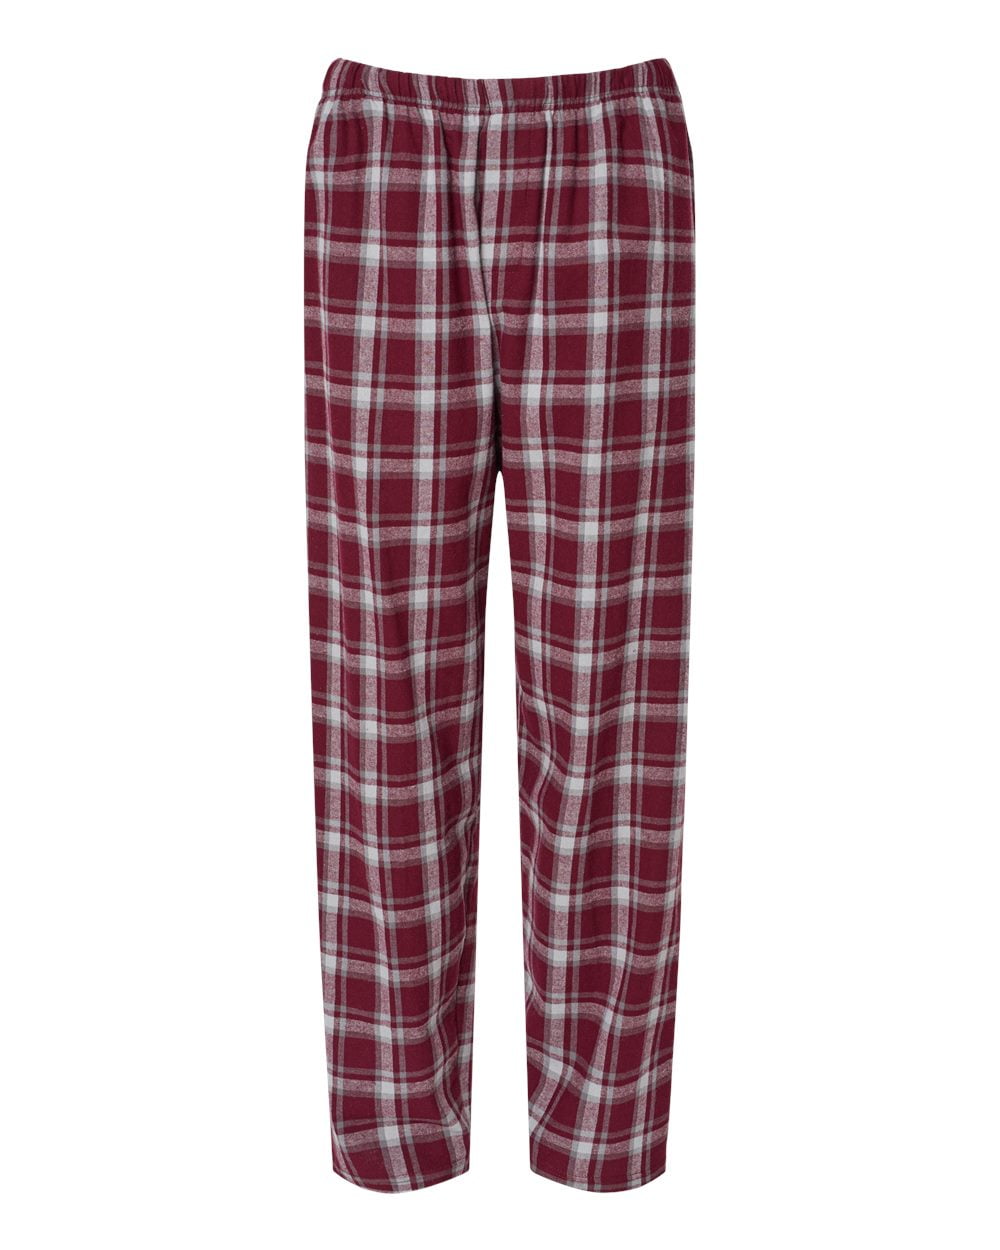 Boxercraft Men's Harley Gordon Plaid Flannel Pajama Pant